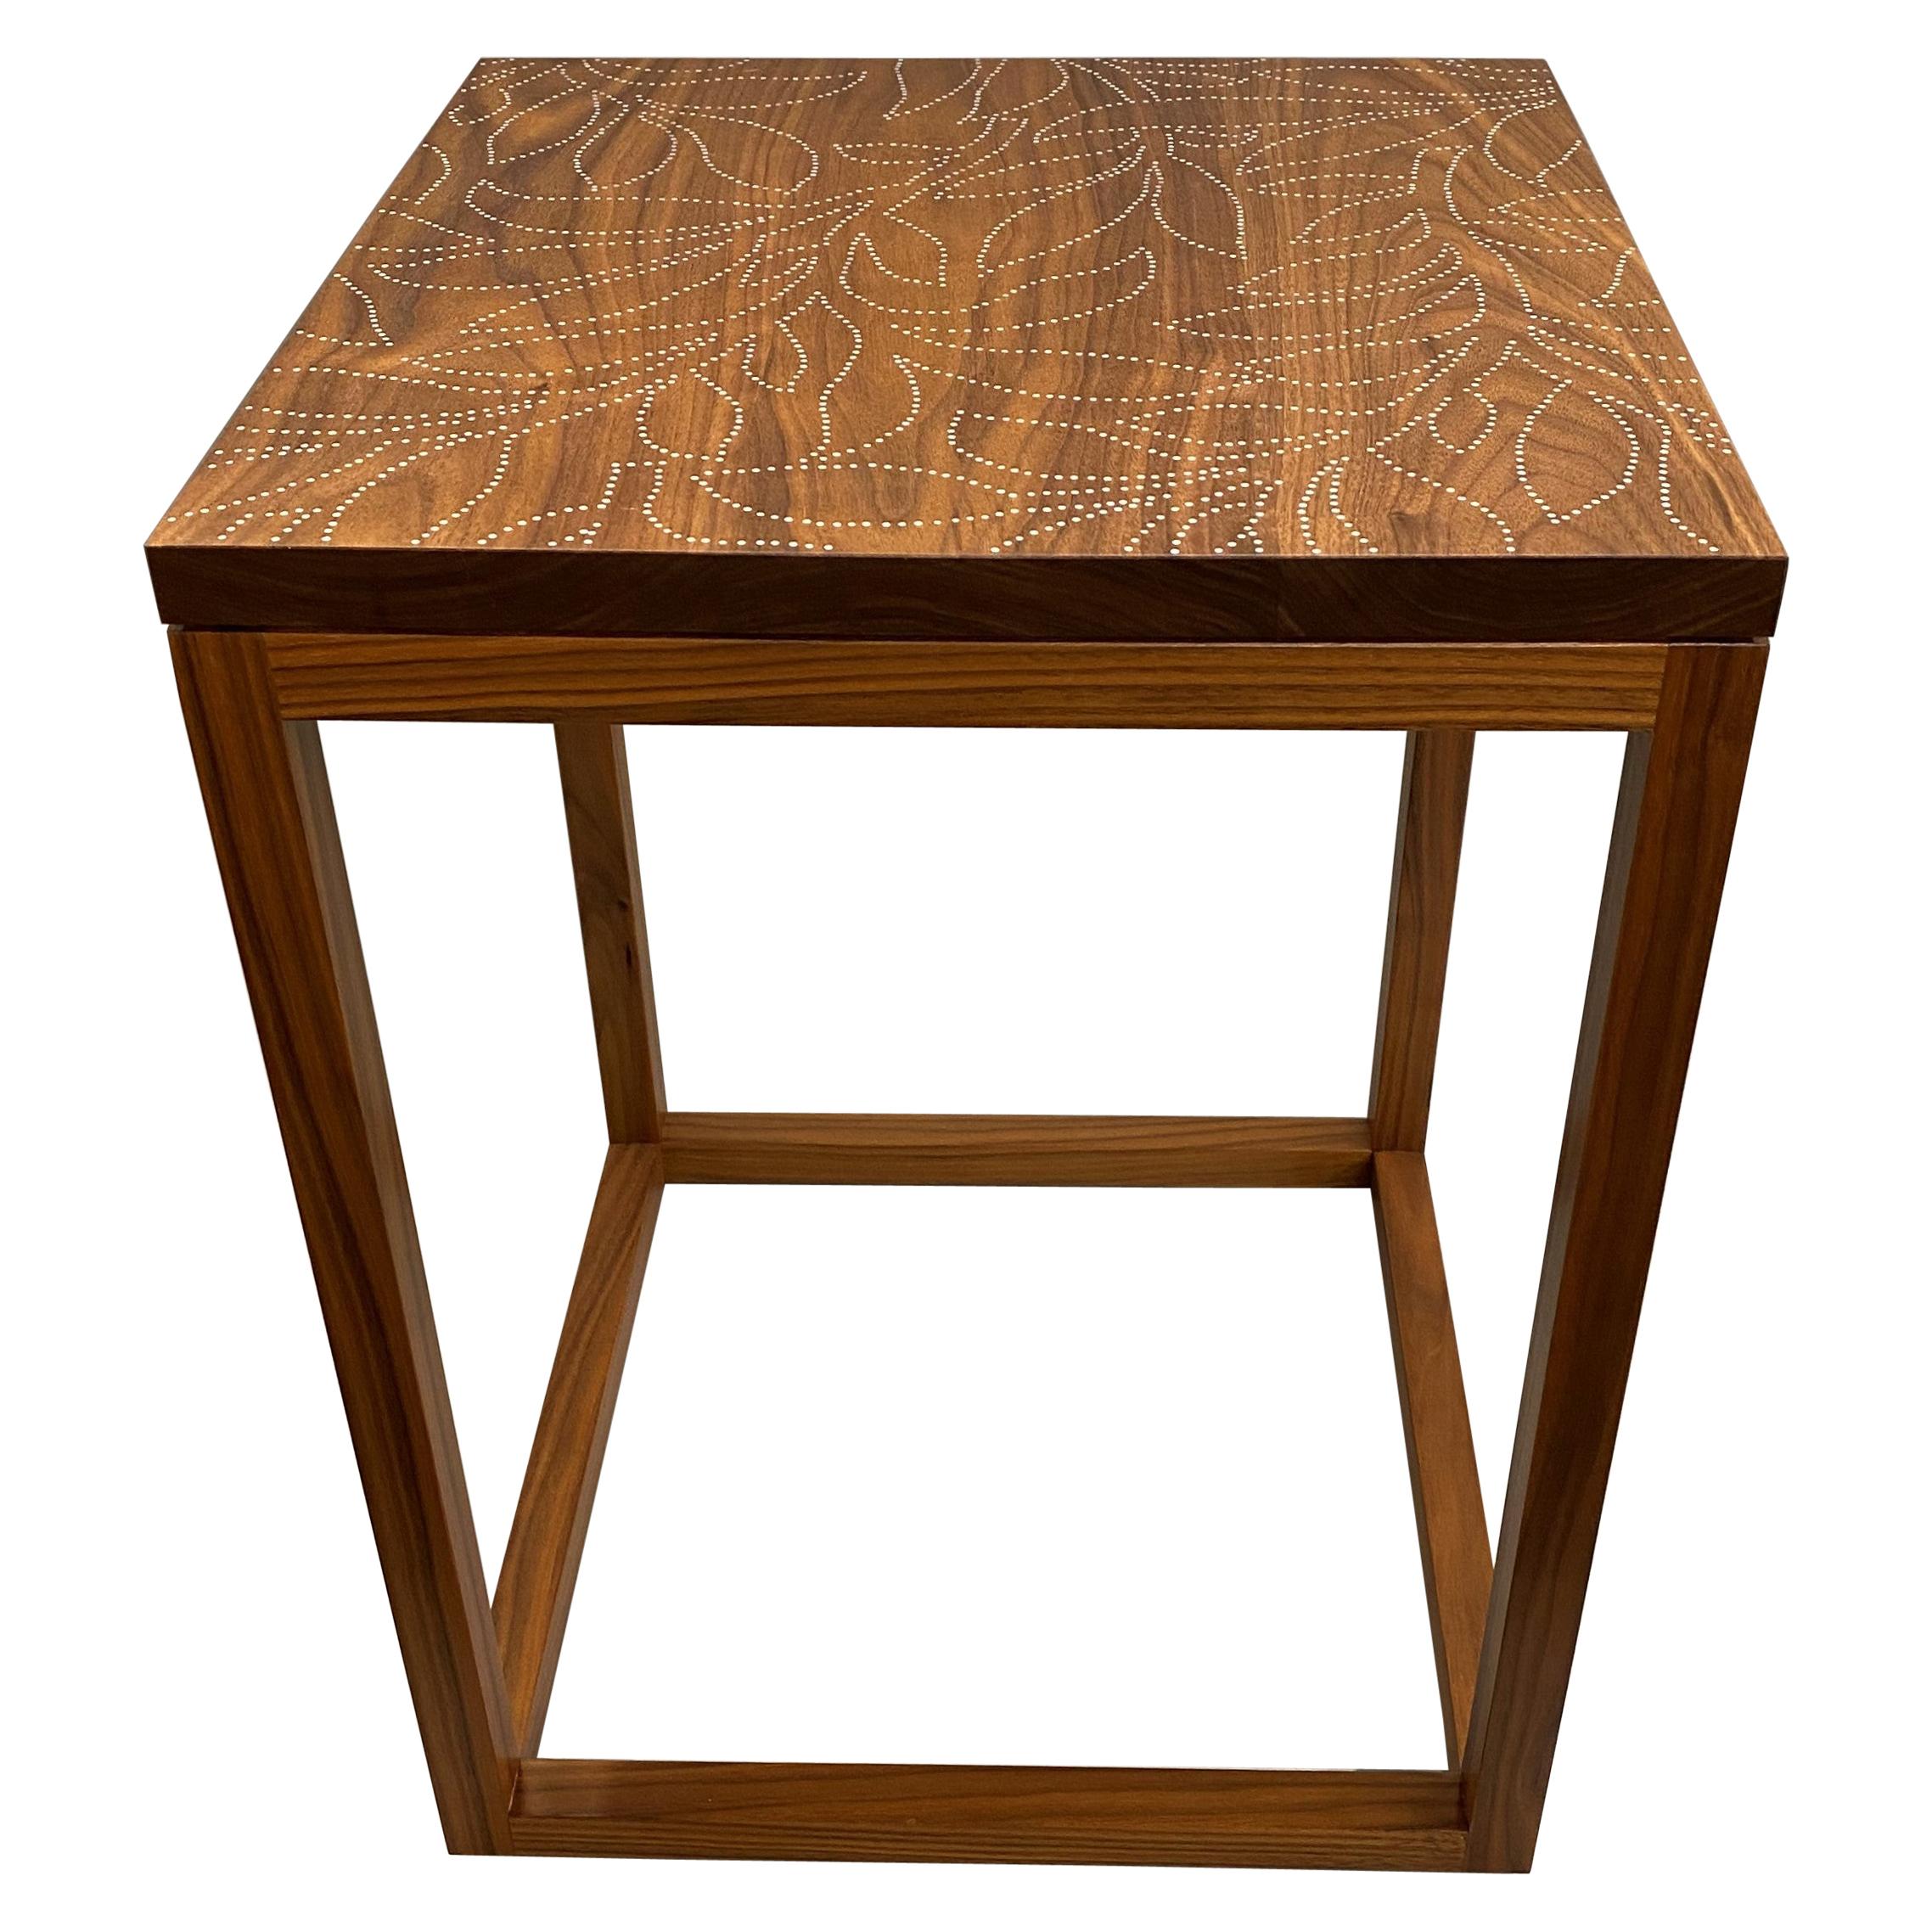 Peter Sandback Modernist Walnut Nailwork Side Table with Foliate Leaf Design